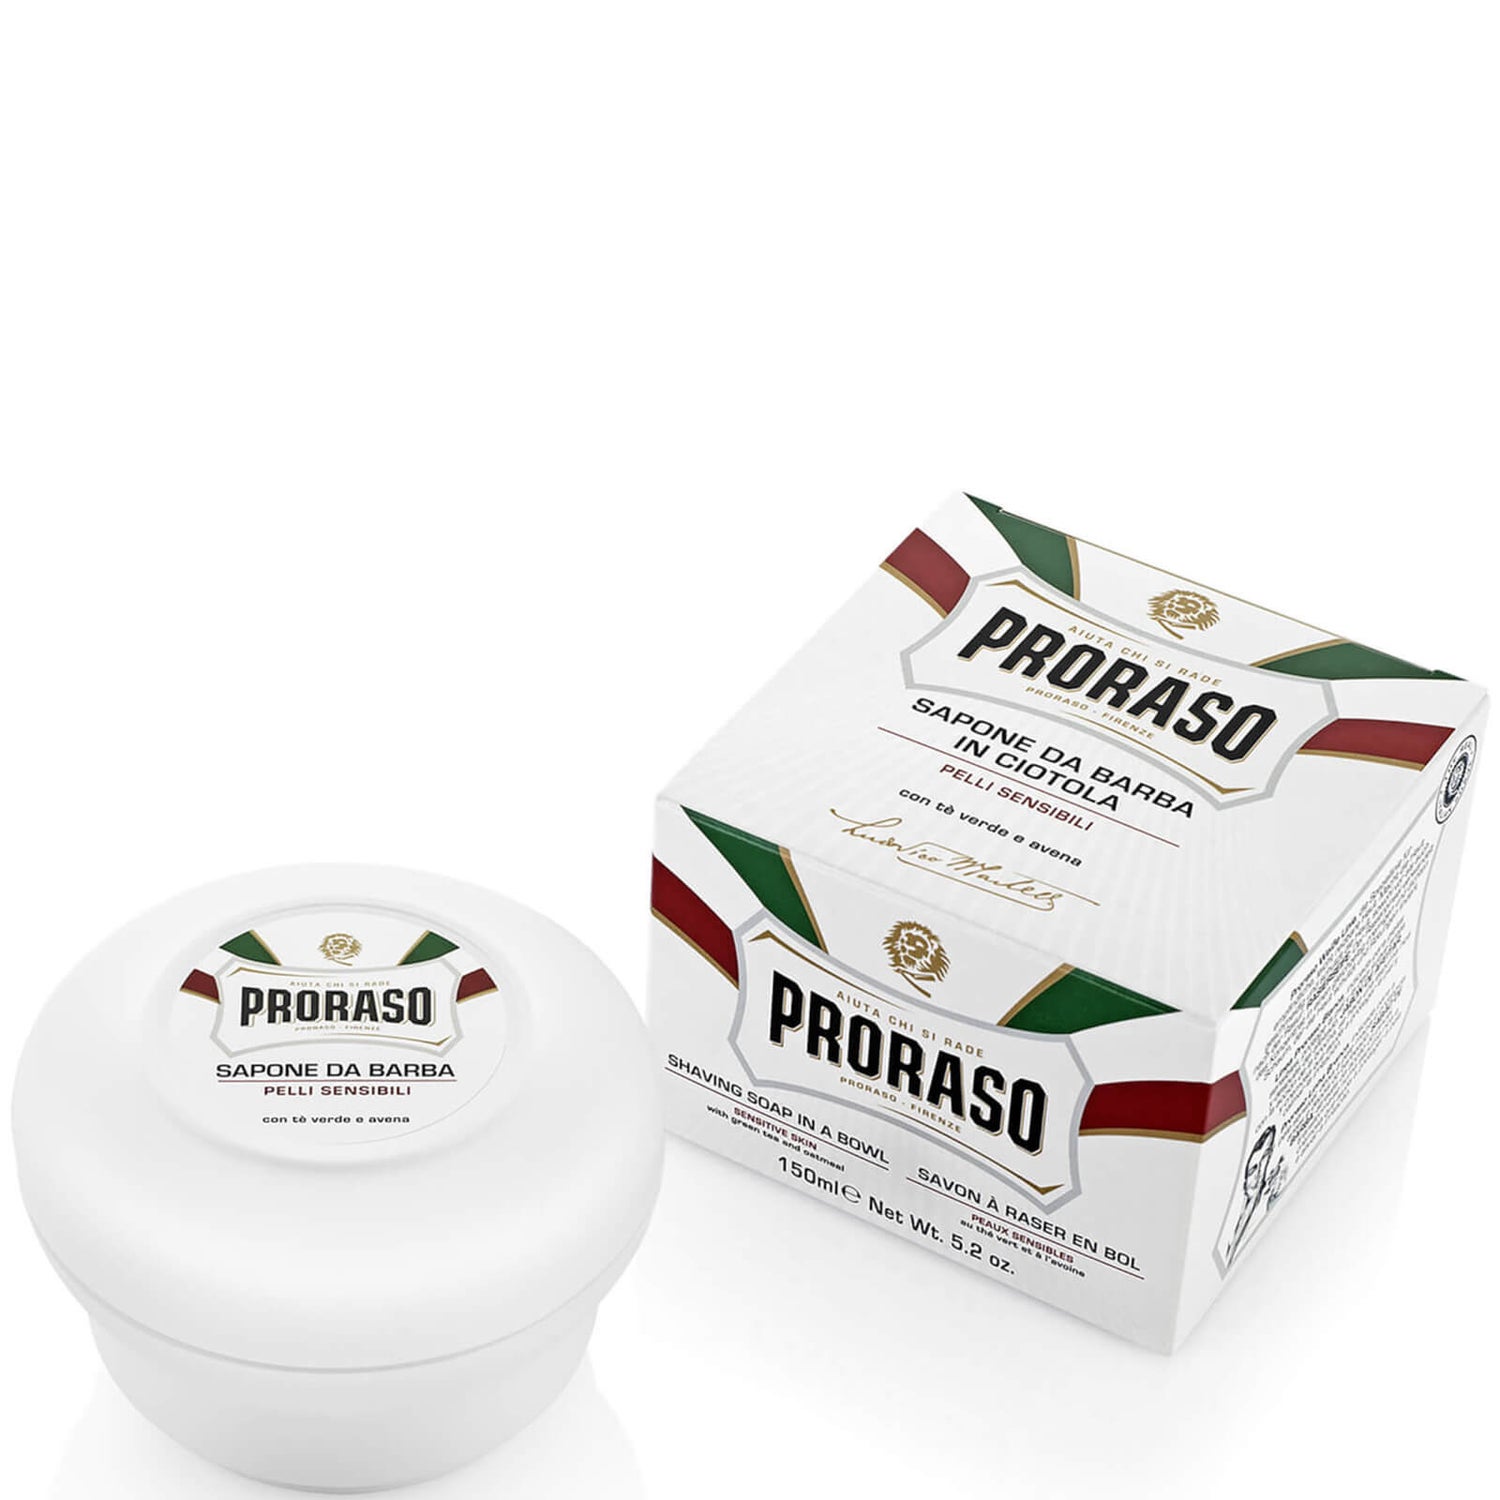 Proraso Shaving Cream Jar - Sensitive(프로라소 셰이빙 크림 자 - 센서티브)